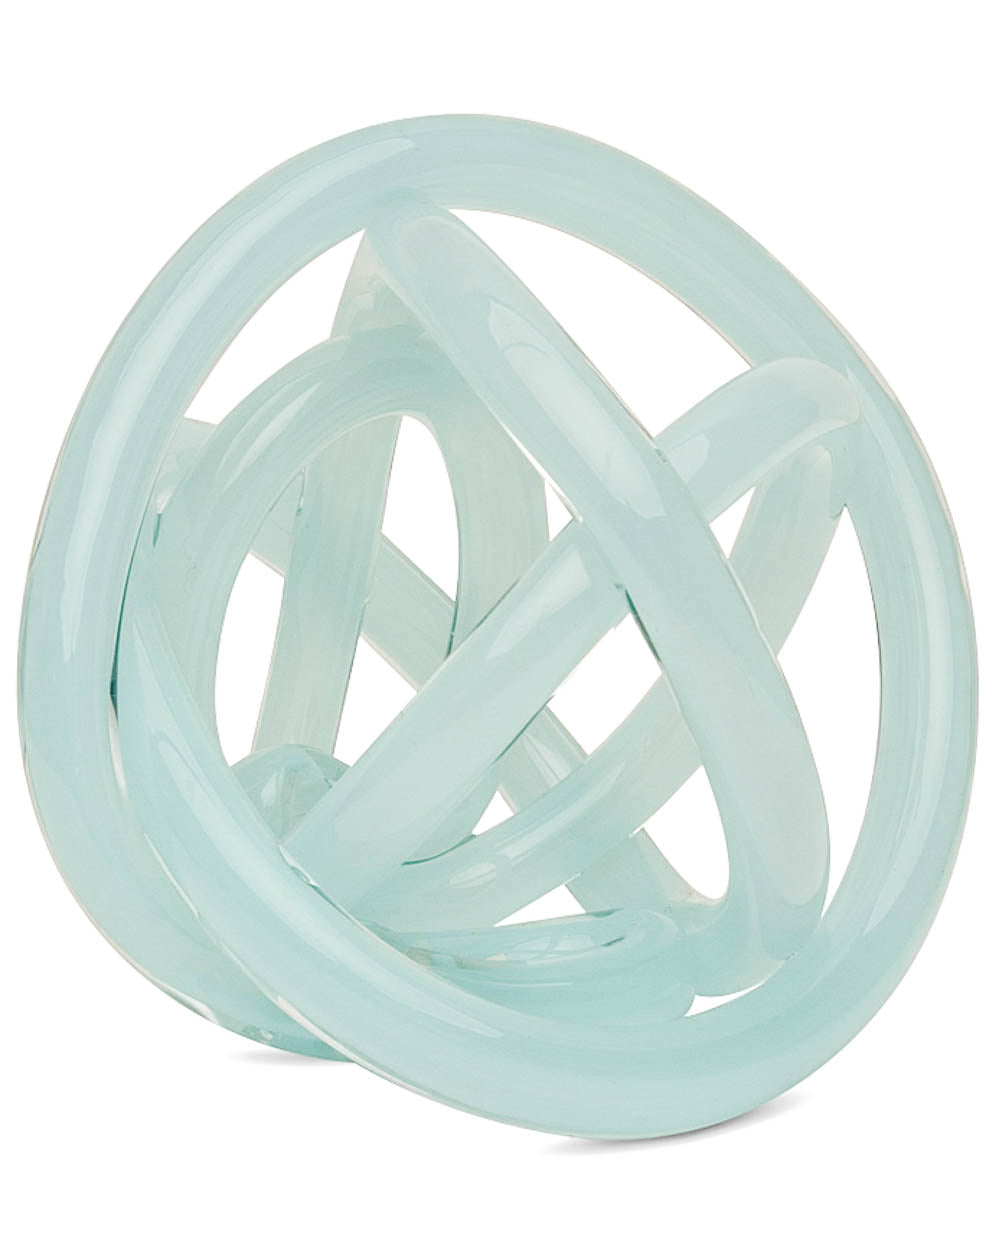 Turquoise Handblown Glass Knot Decor